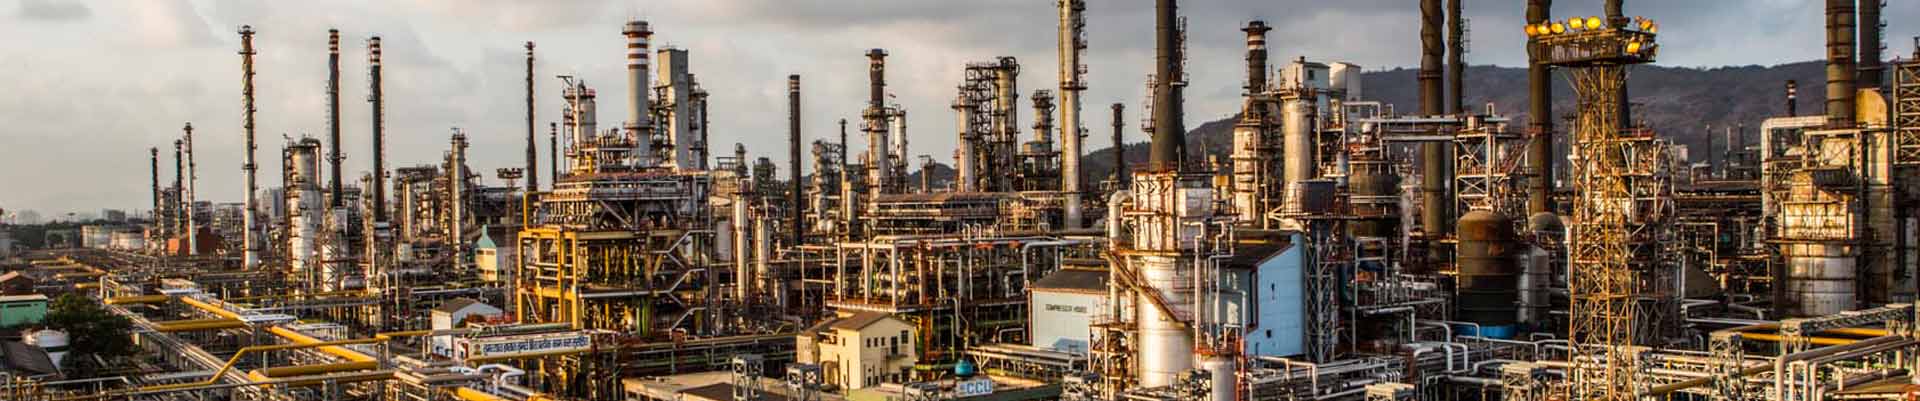 Crude Oil Refinery Process Units